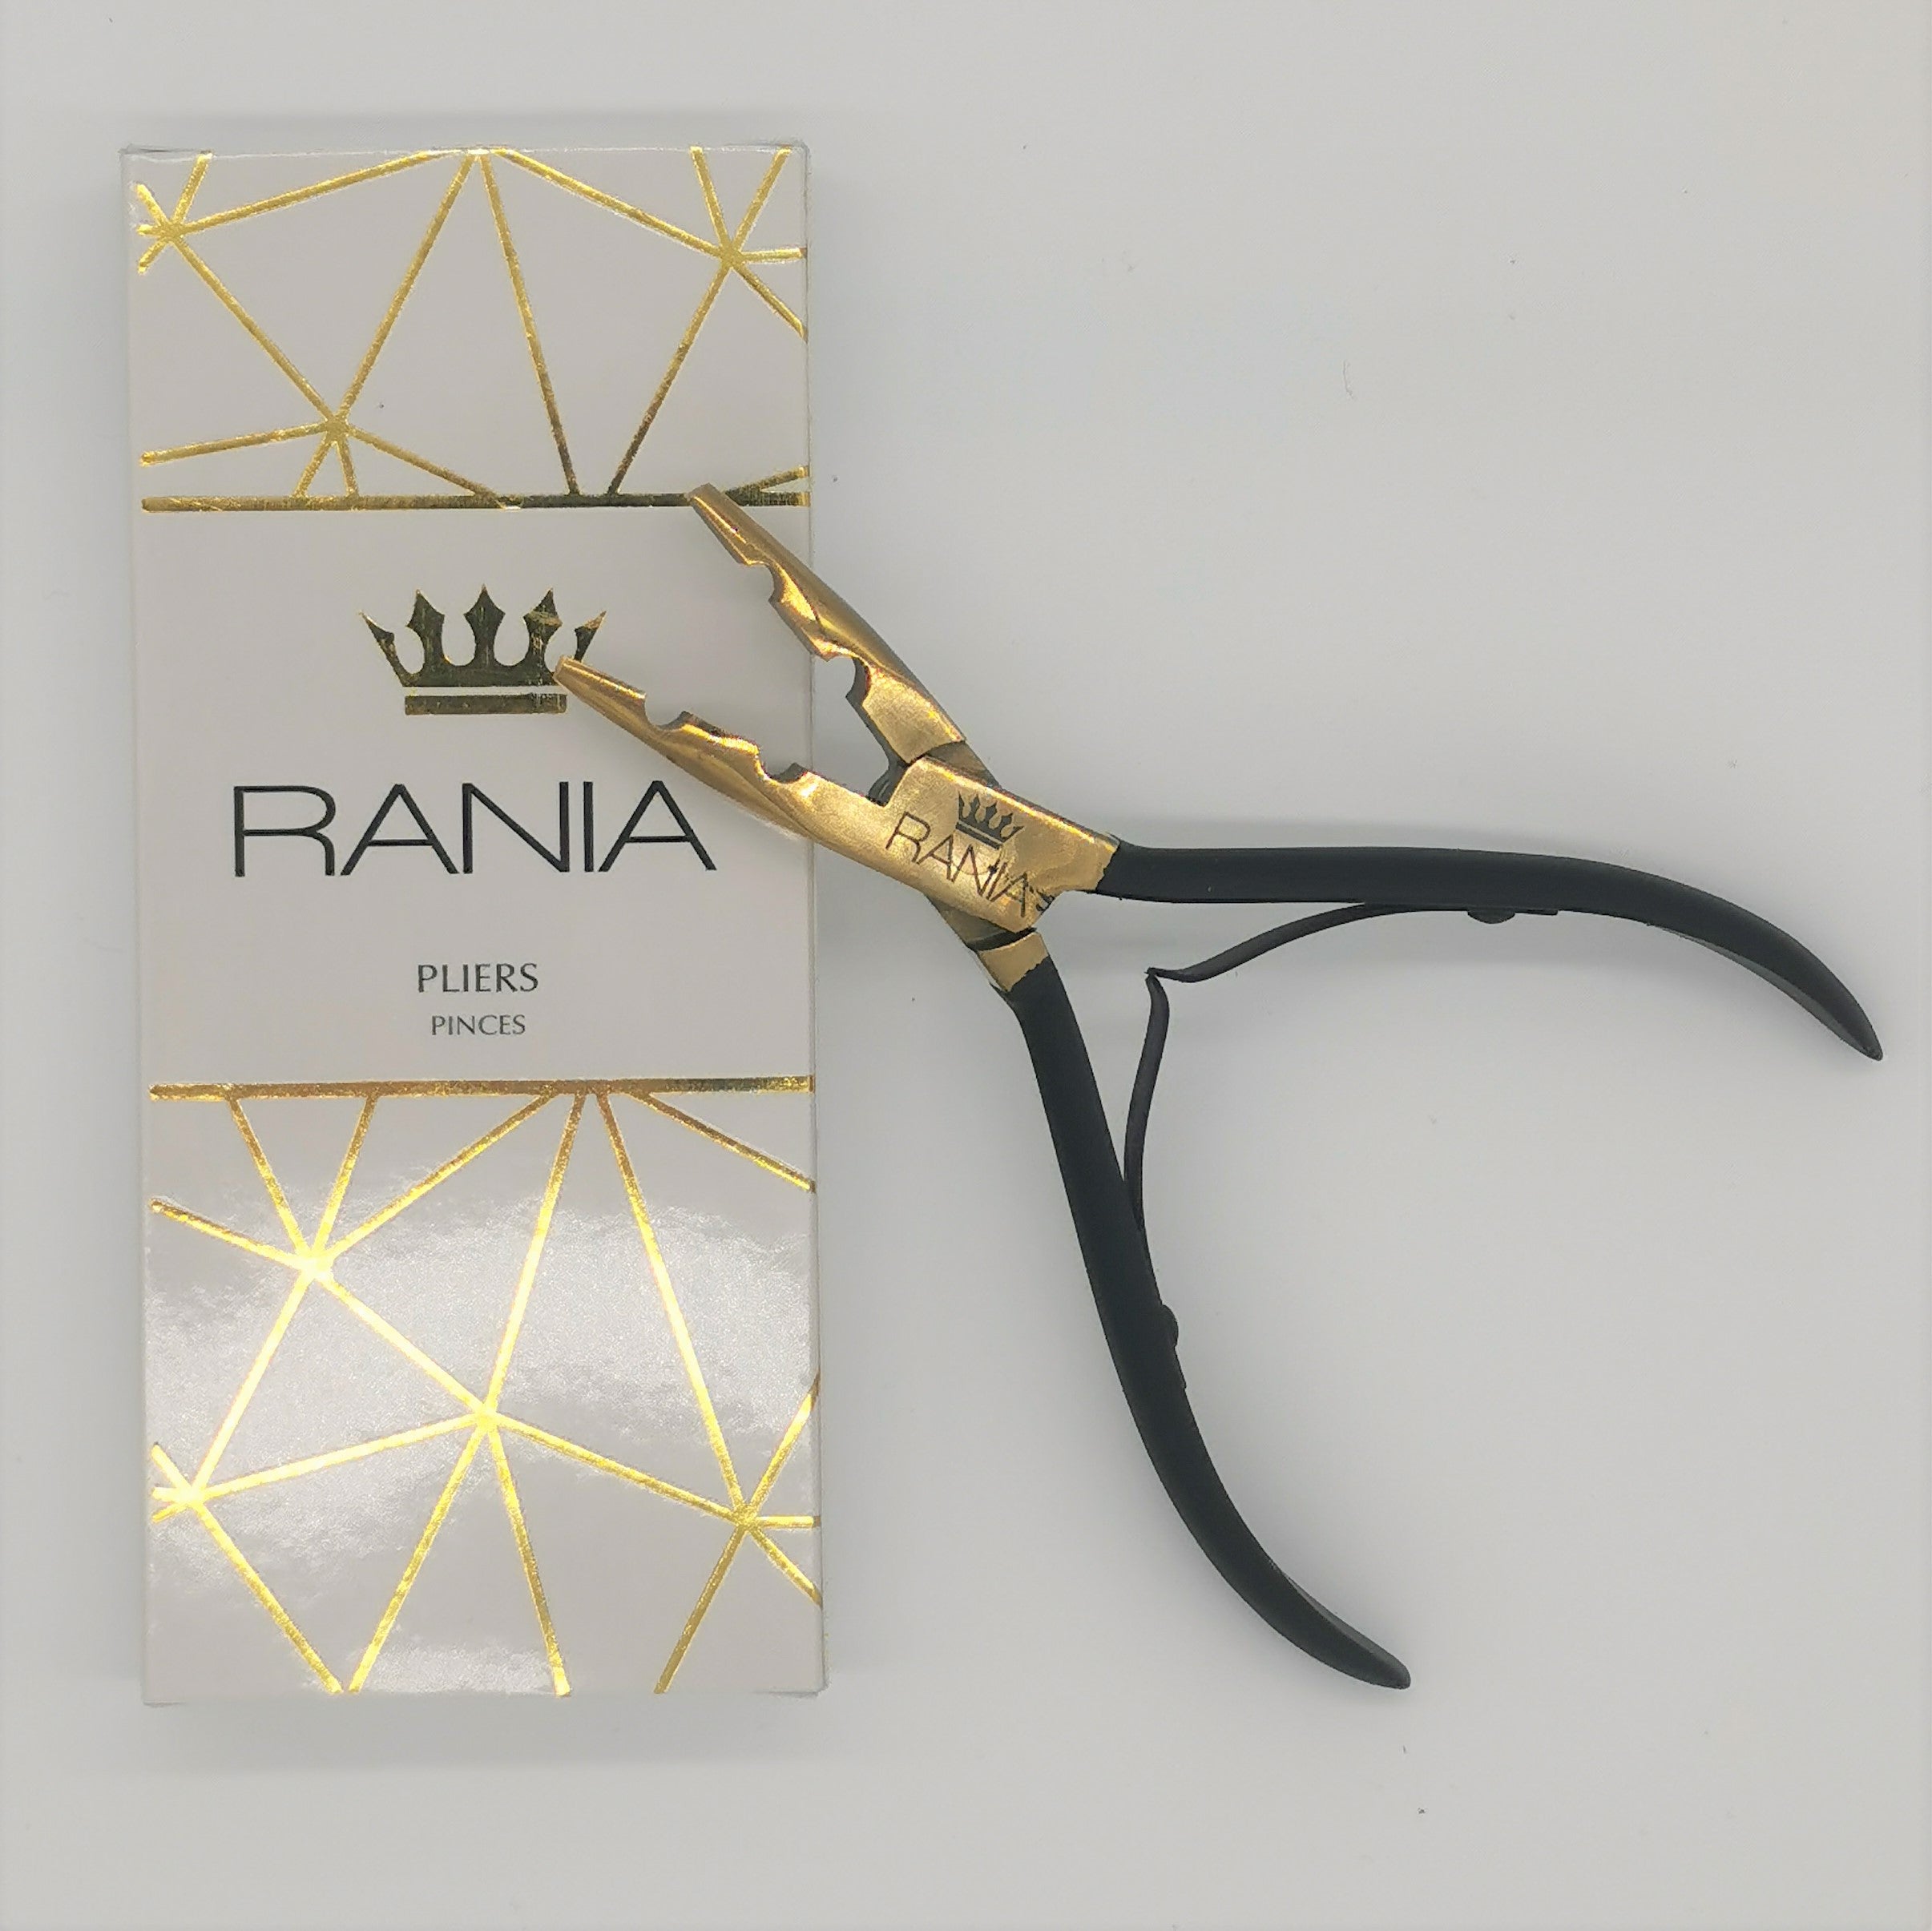 Rania - Professional Pliers - Creata Beauty - Professional Beauty Products